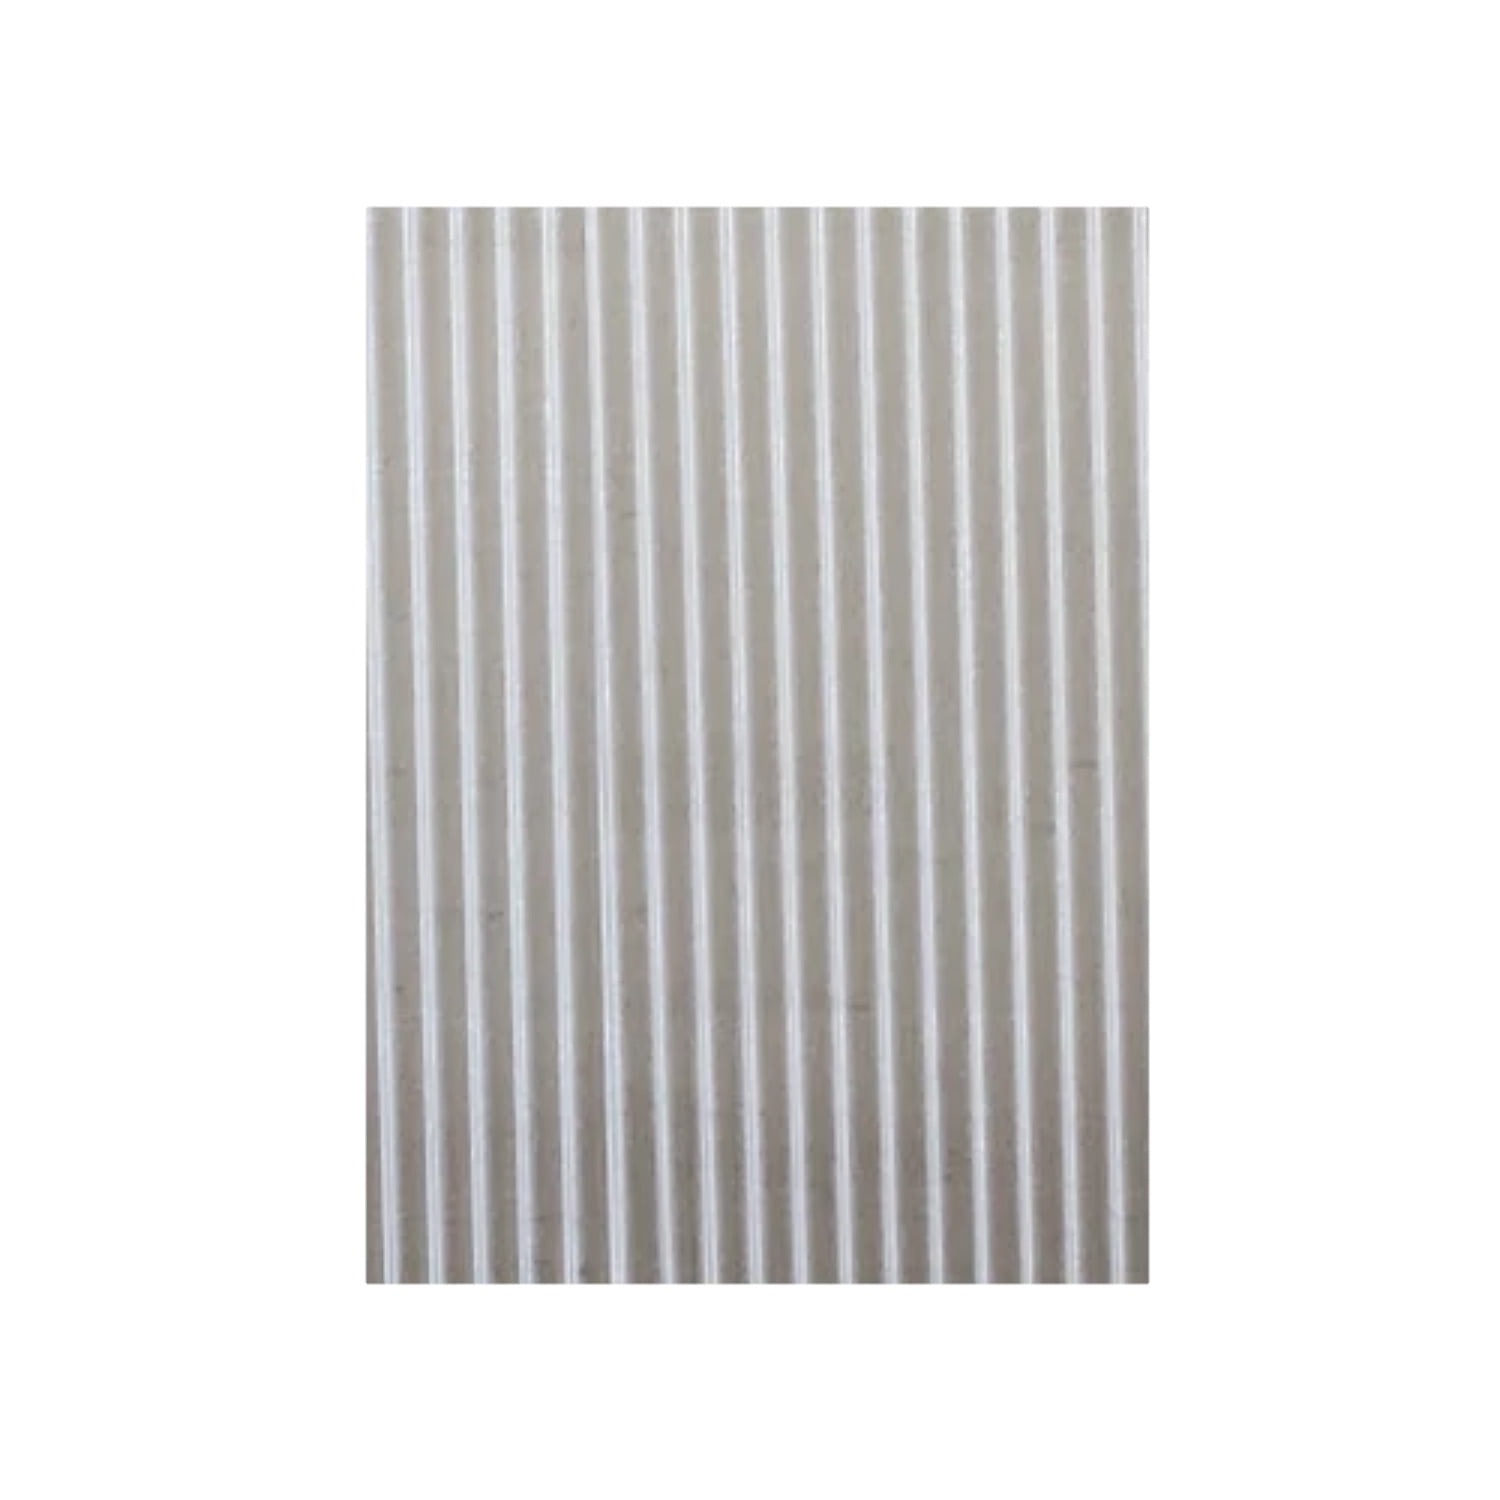 14X20 #200 Single Wall Corrugated Sheets